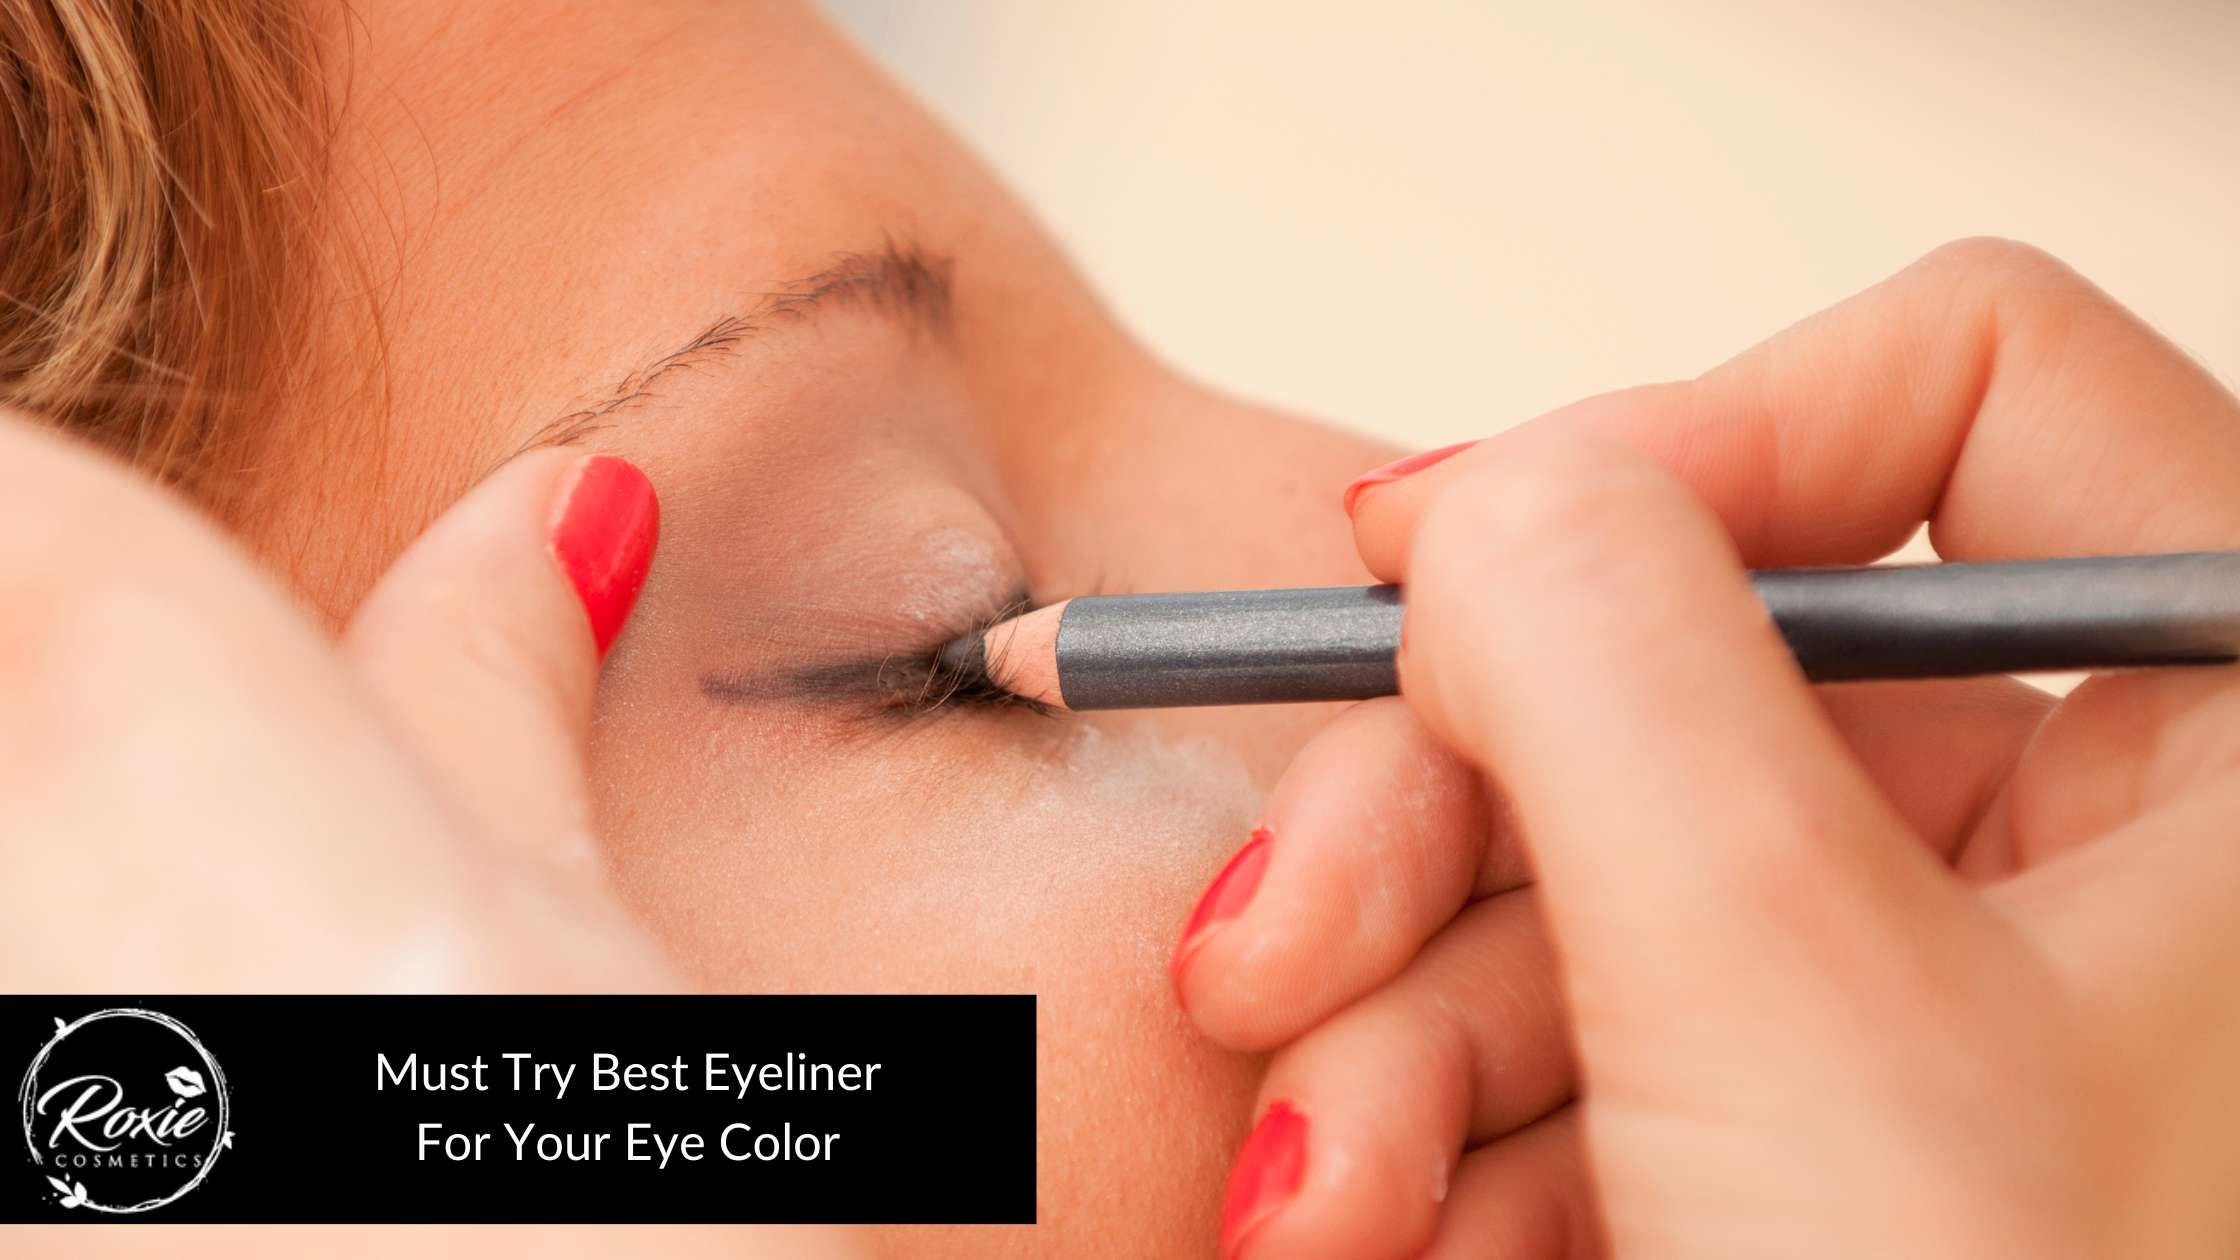 How To Choose Eye Makeup Based On Eye Colour - SUGAR Cosmetics